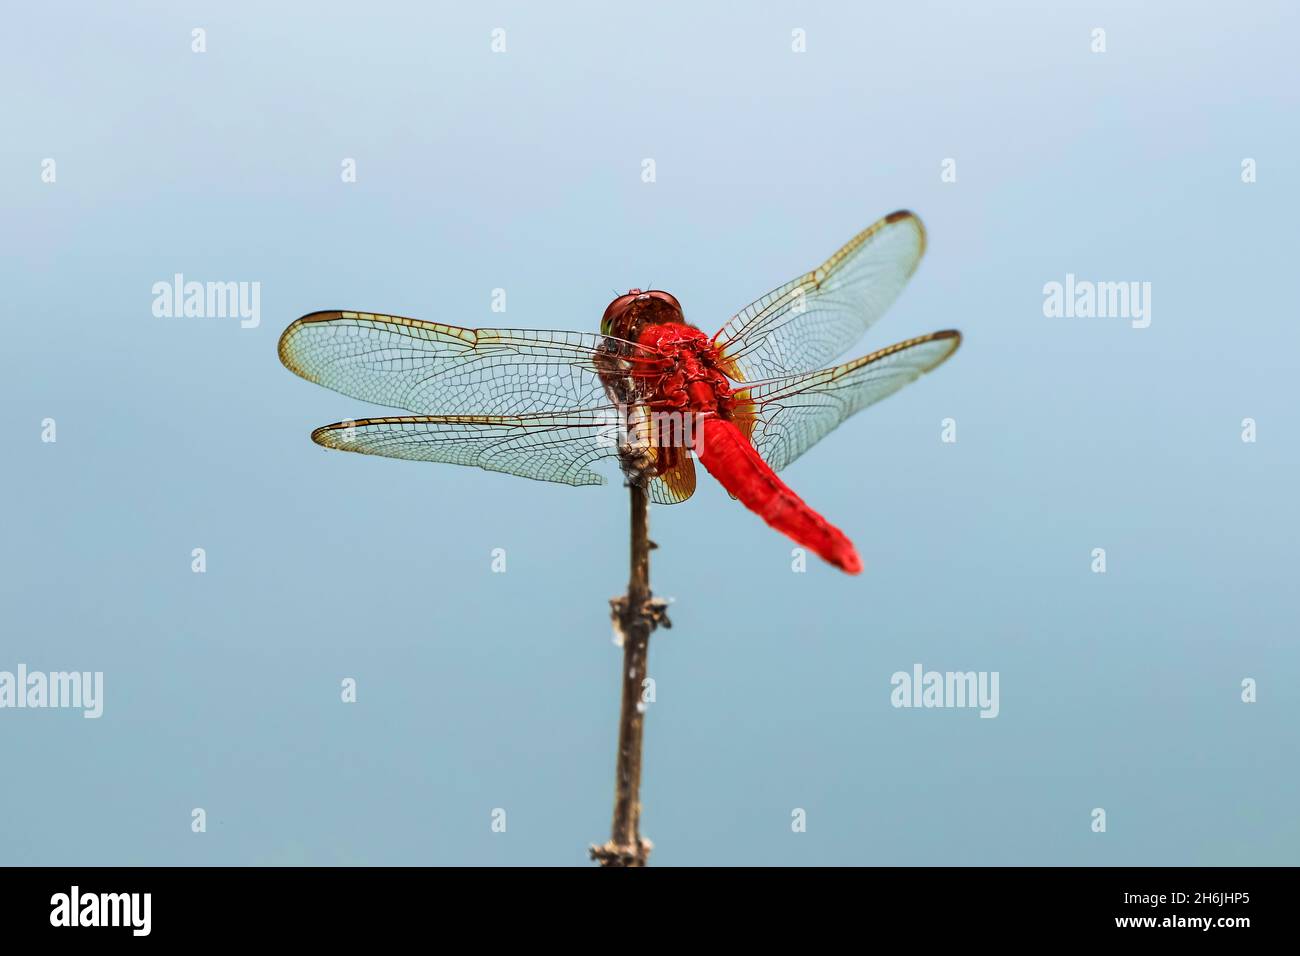 Dragonfly (Urothemis signata) de Scarlet (Basker) par étang à poissons, Rammang-Rammang, Maros, Sulawesi du Sud, Indonésie,Asie du Sud-est, Asie Banque D'Images